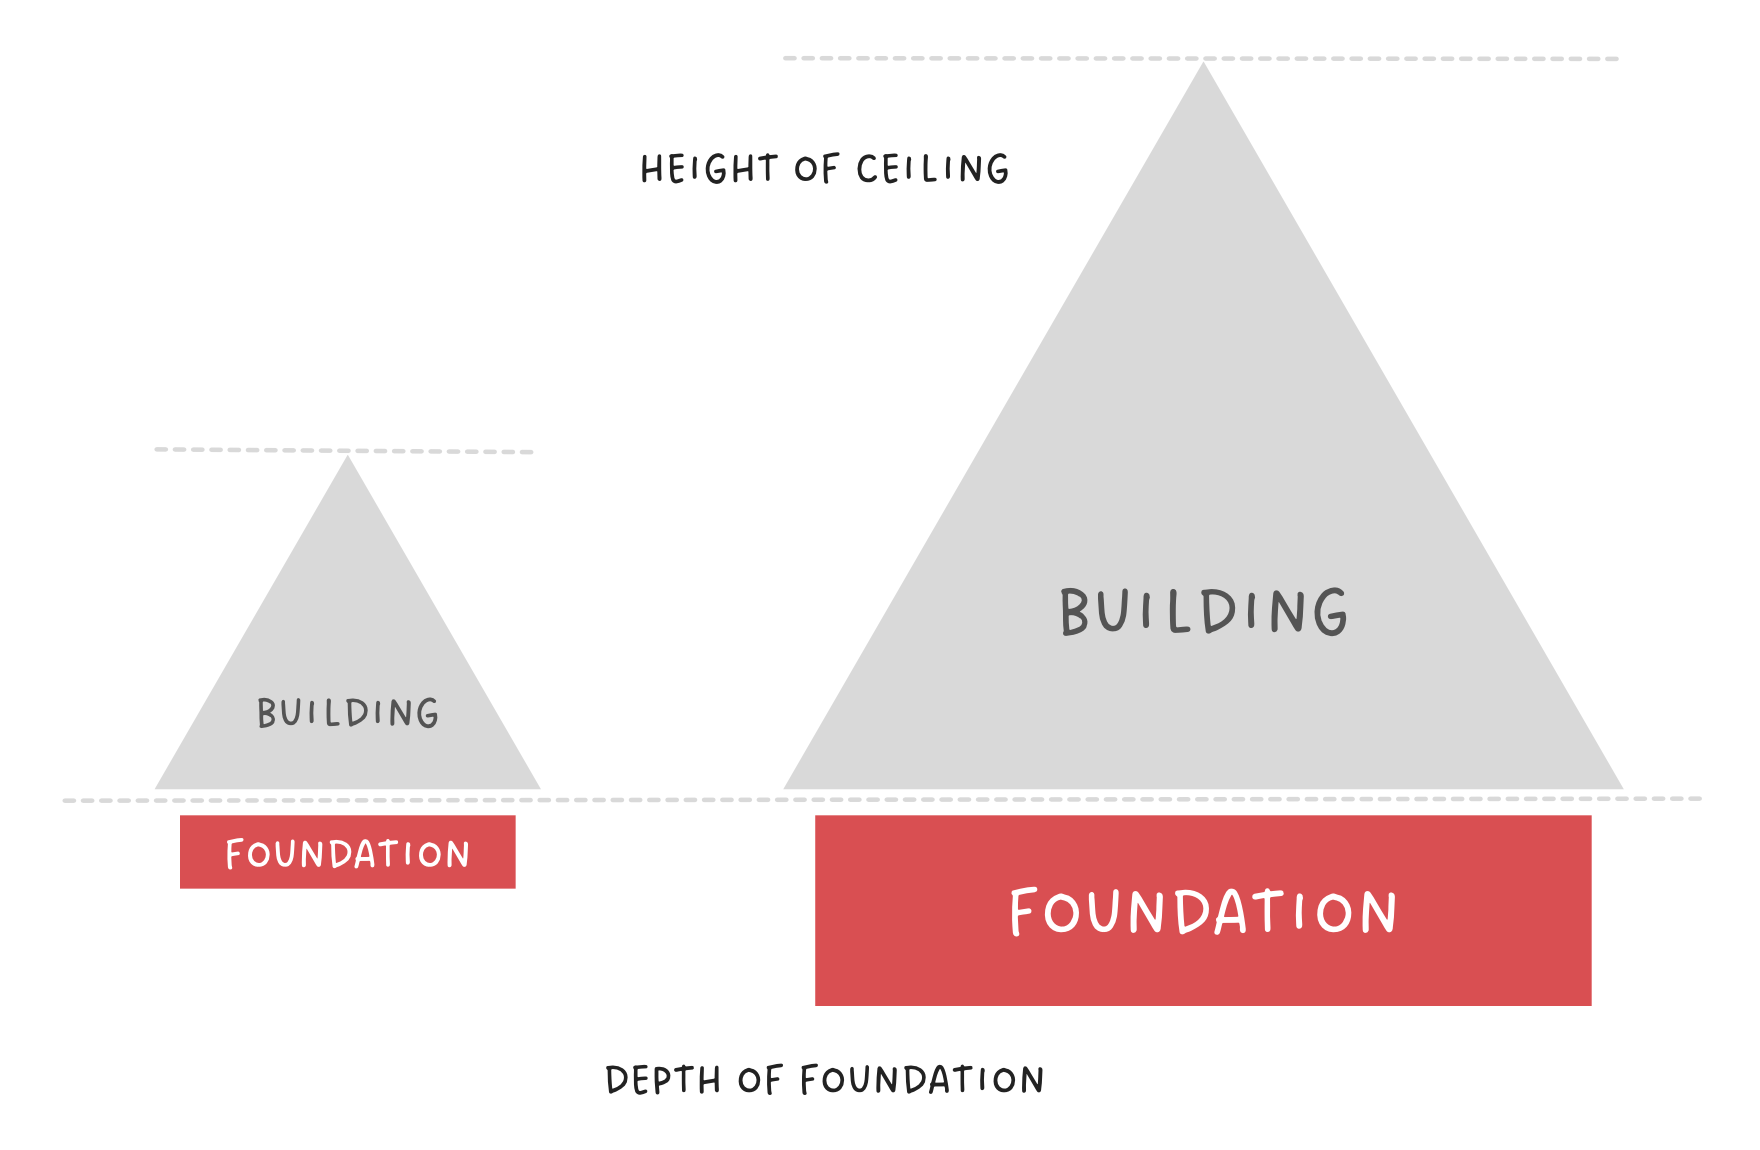 Foundation-Ceiling